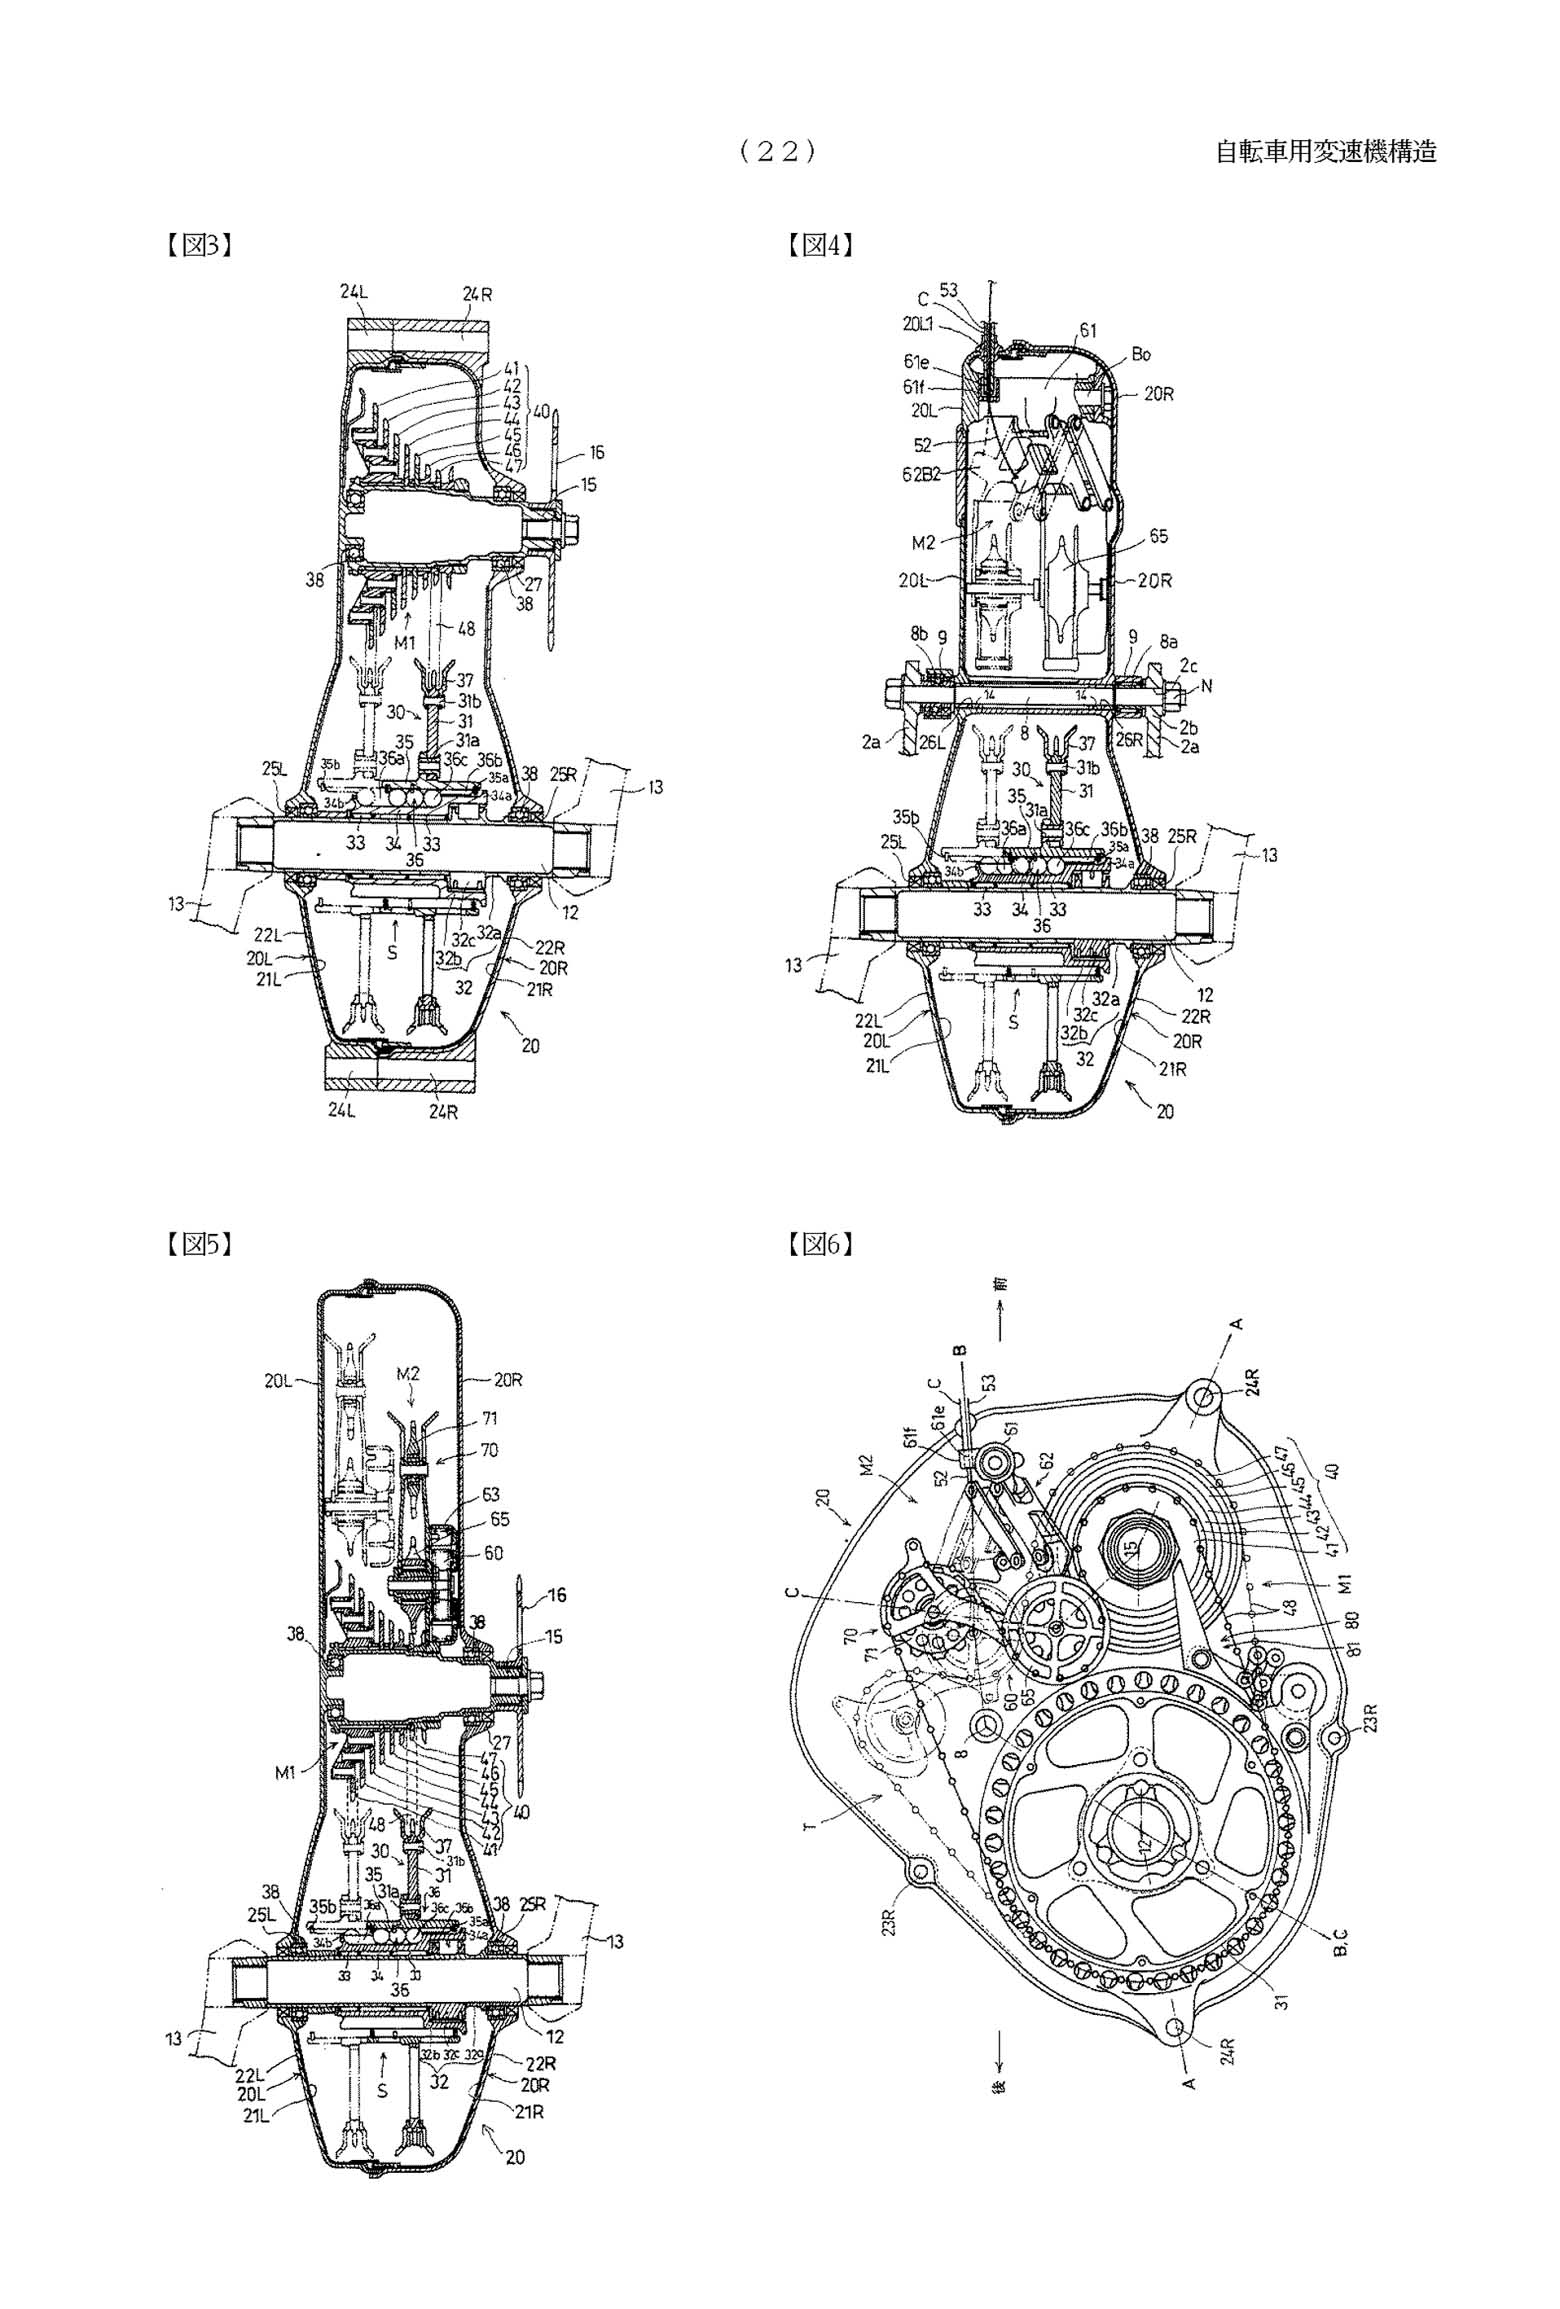 Japanese Patent 4413657 - Honda page 22 main image